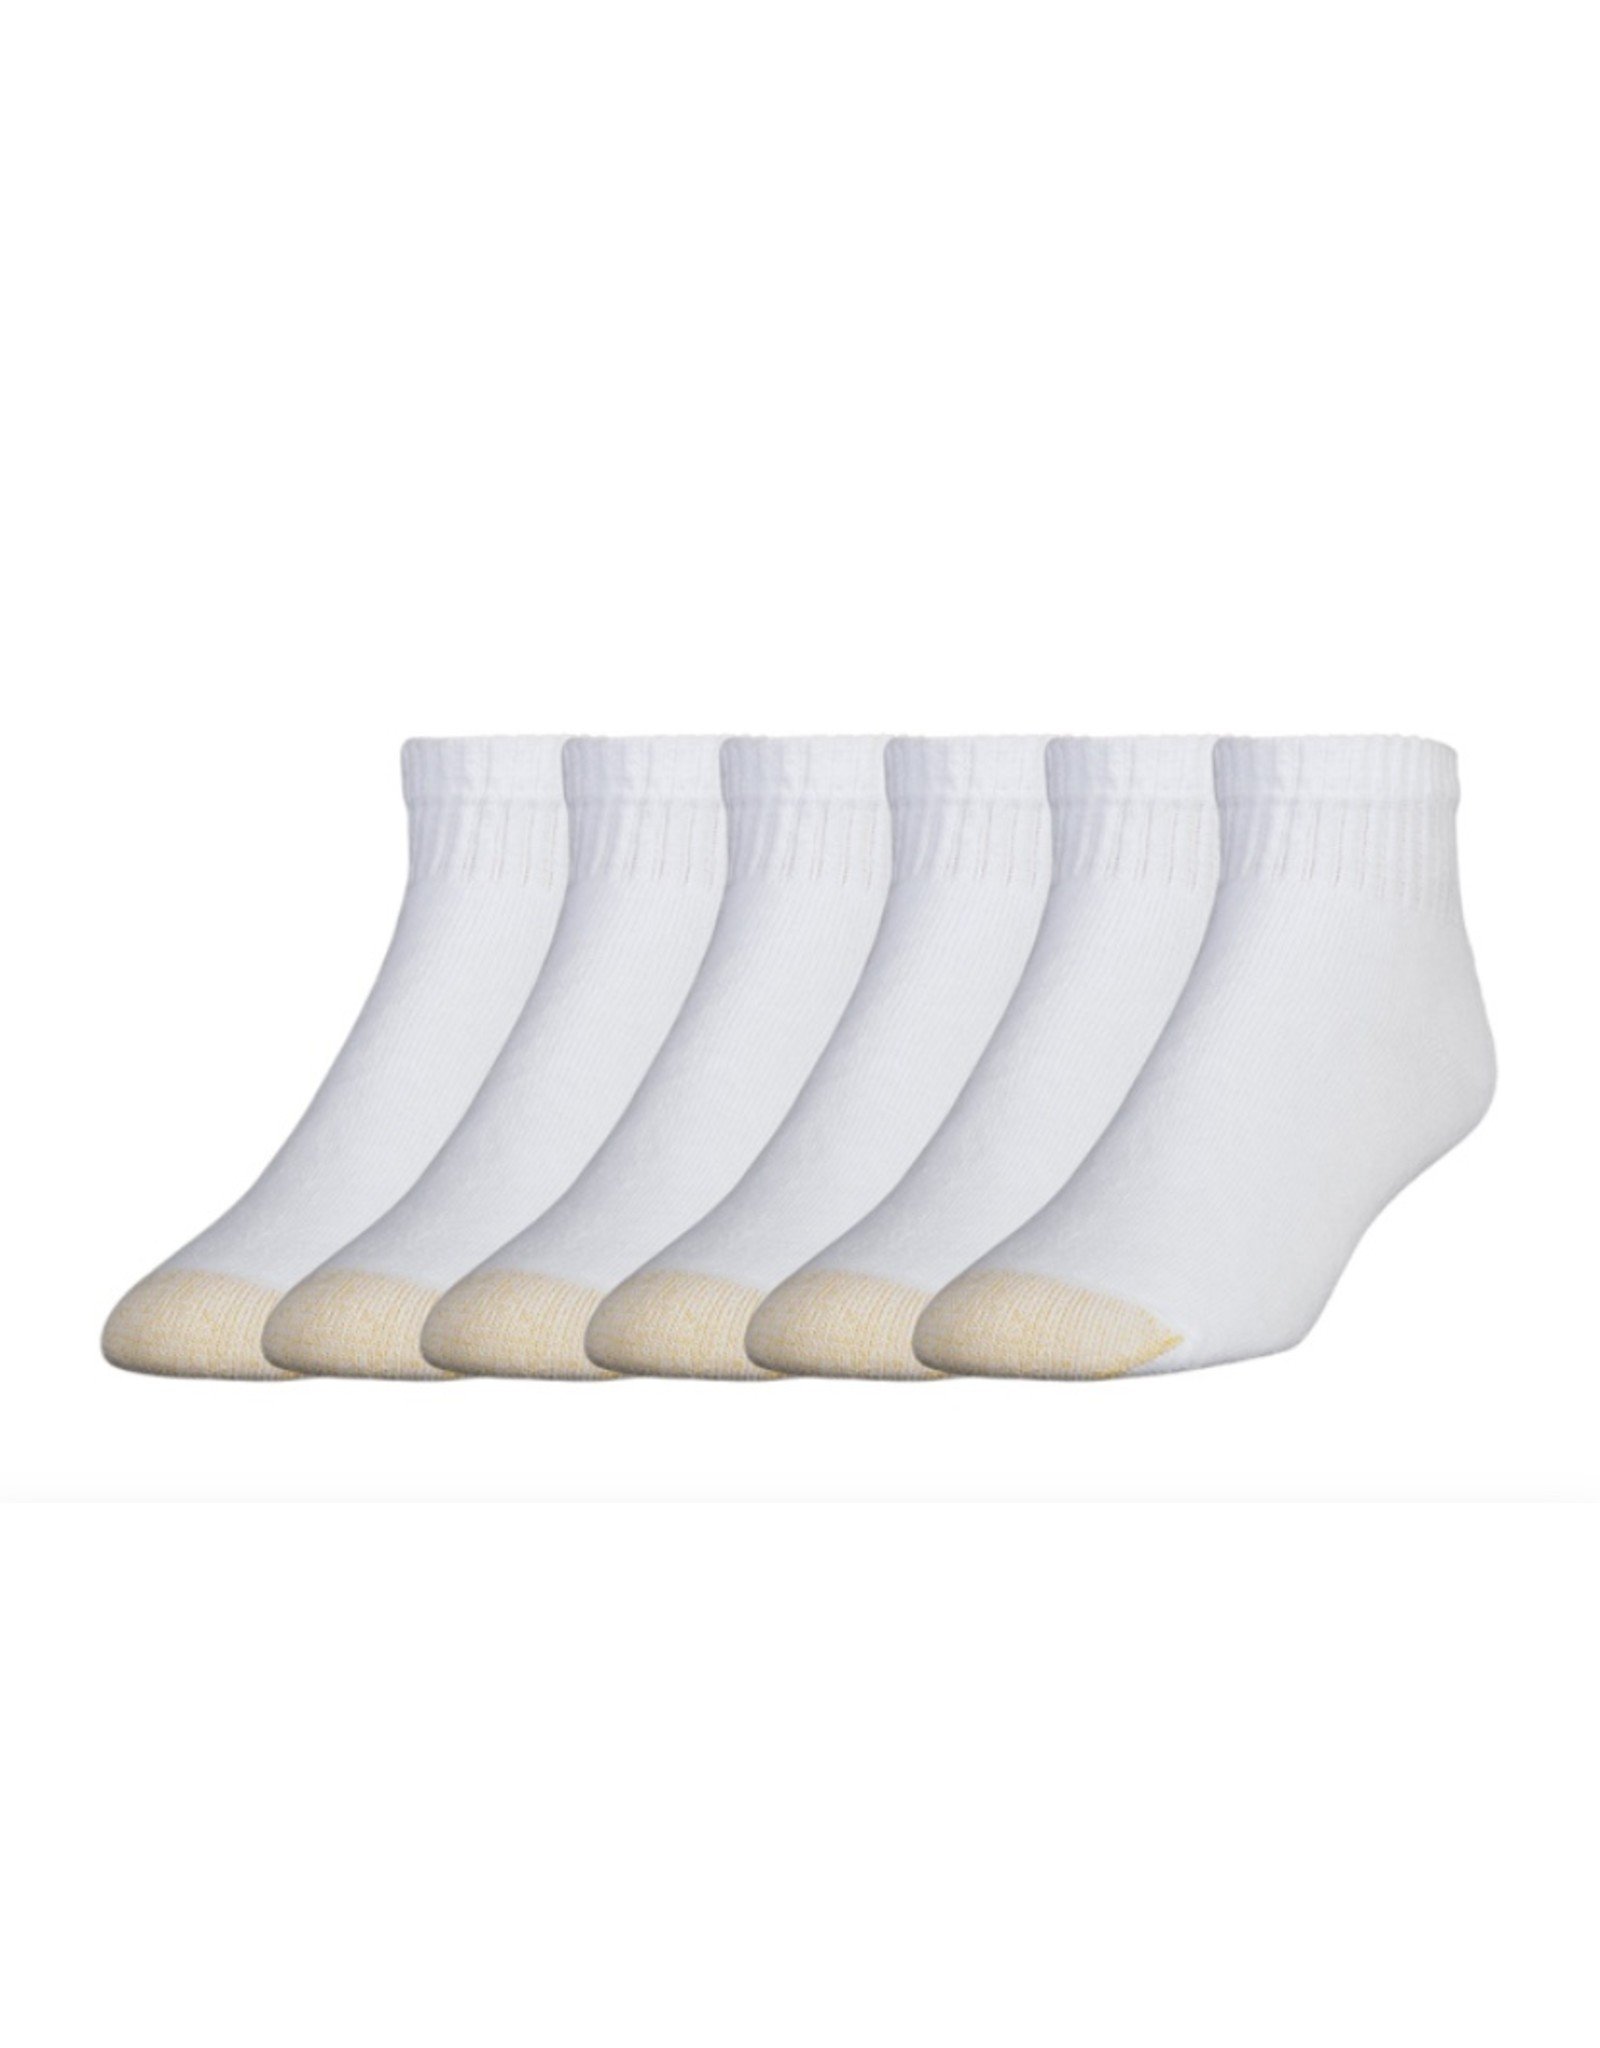 Goldtoe Goldtoe Men's Cotton Athletic Quarter Socks 6-Pack